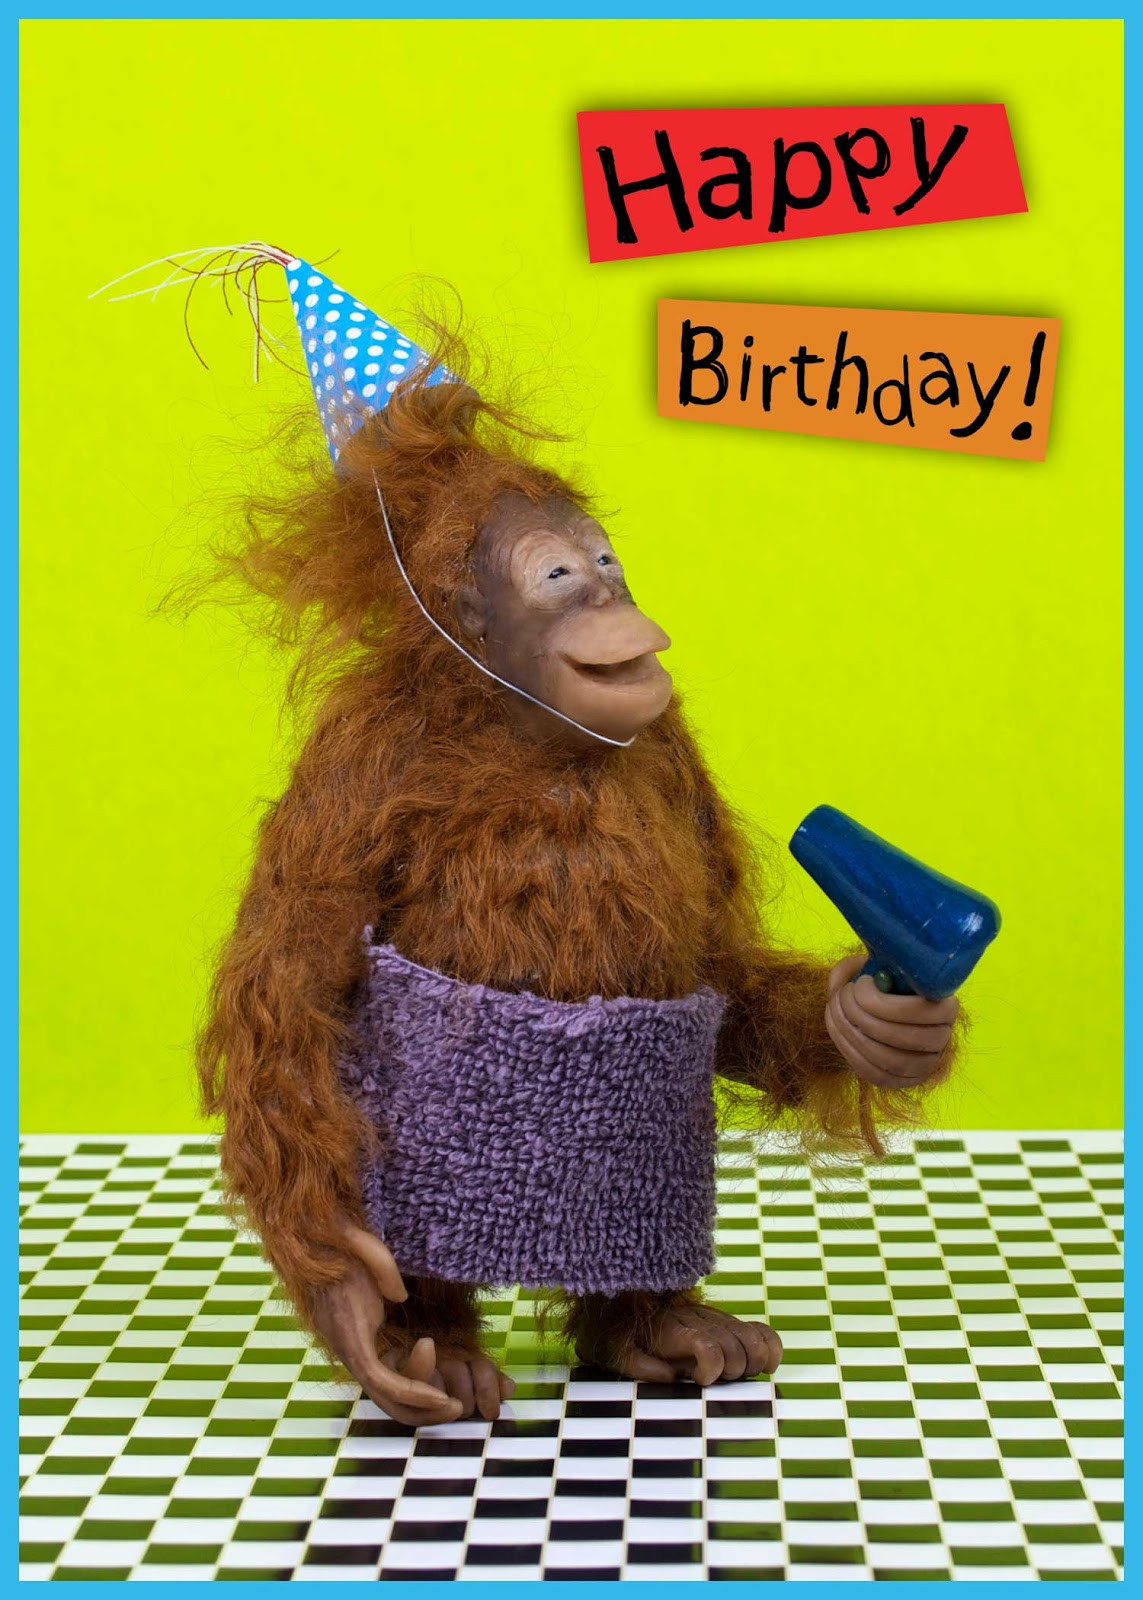 Happy Birthday Card Funny
 Caroline Gray Work in Progress Kids’ Birthday Cards